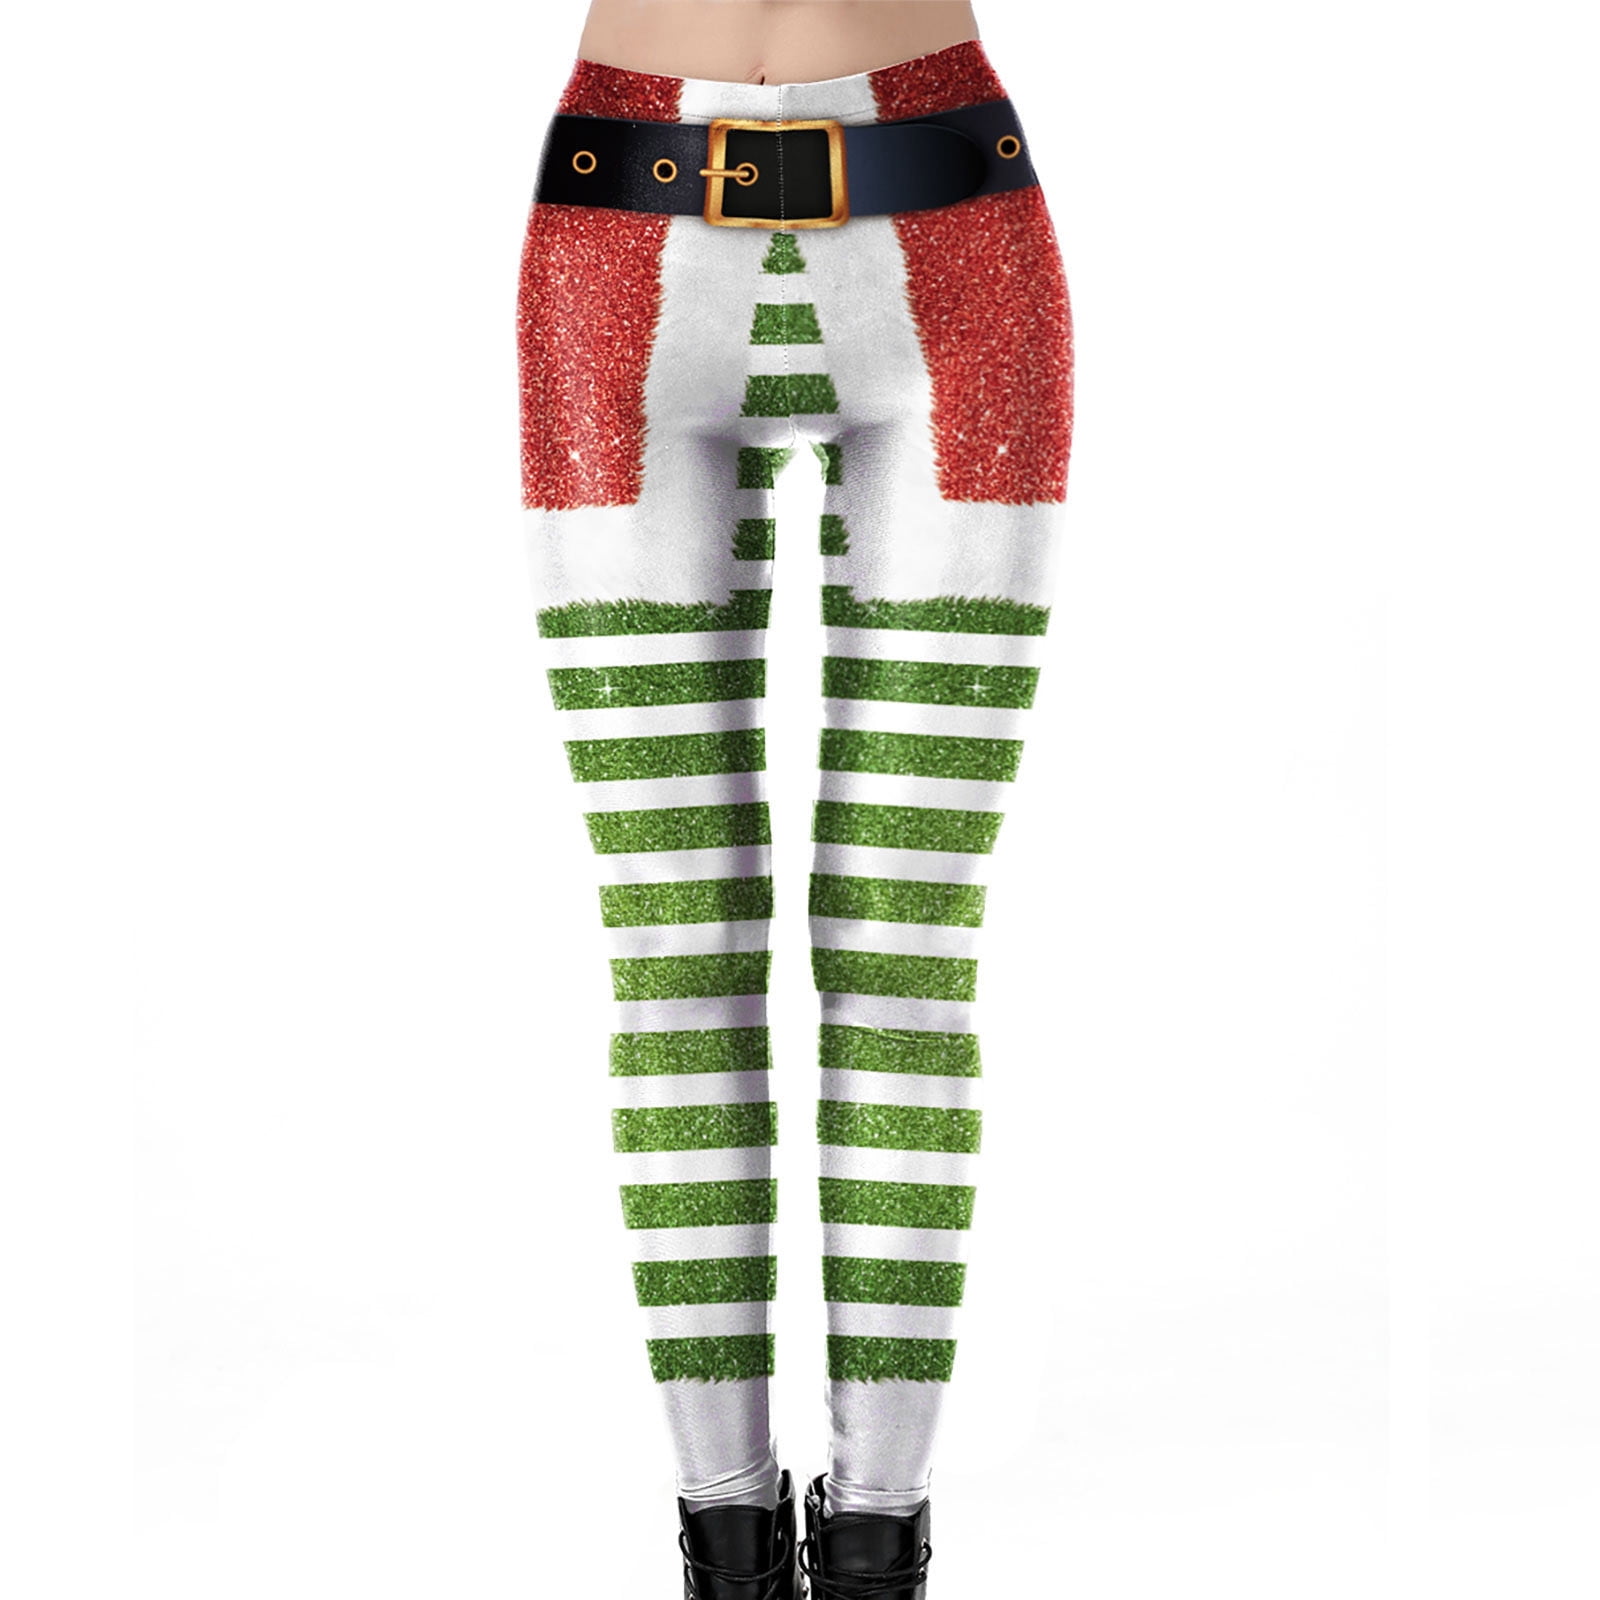 Lolmot Workout Leggings for Women Funny 3D Printed Ugly Christmas Leggings  Santa Claus Stripes Print Holiday High Waist Slim Fit Xmas Tights Pants